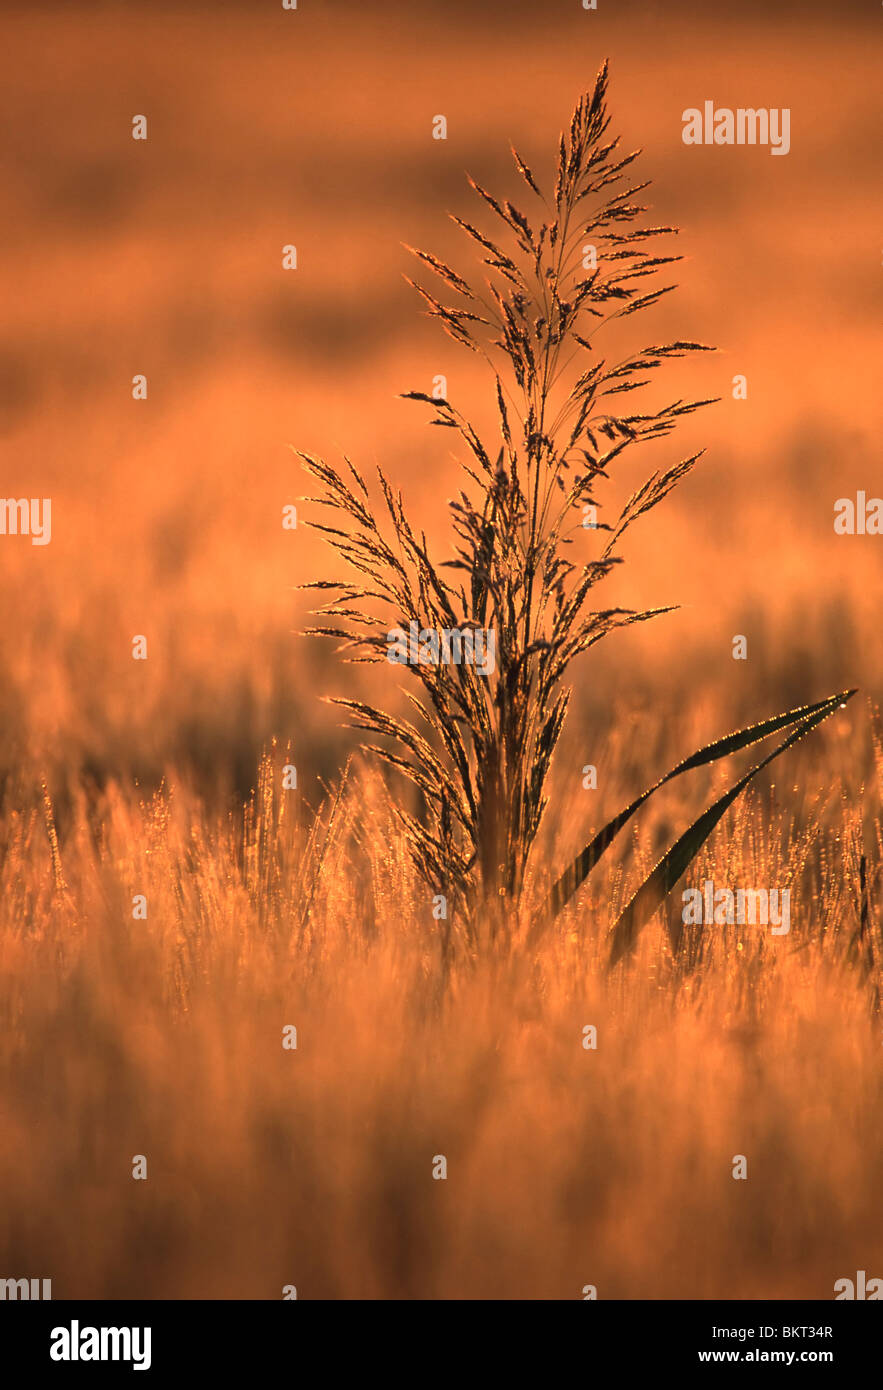 Grashalm in morgenlicht, BelgiÃ« Grass in morninglight, Belgium Stock Photo